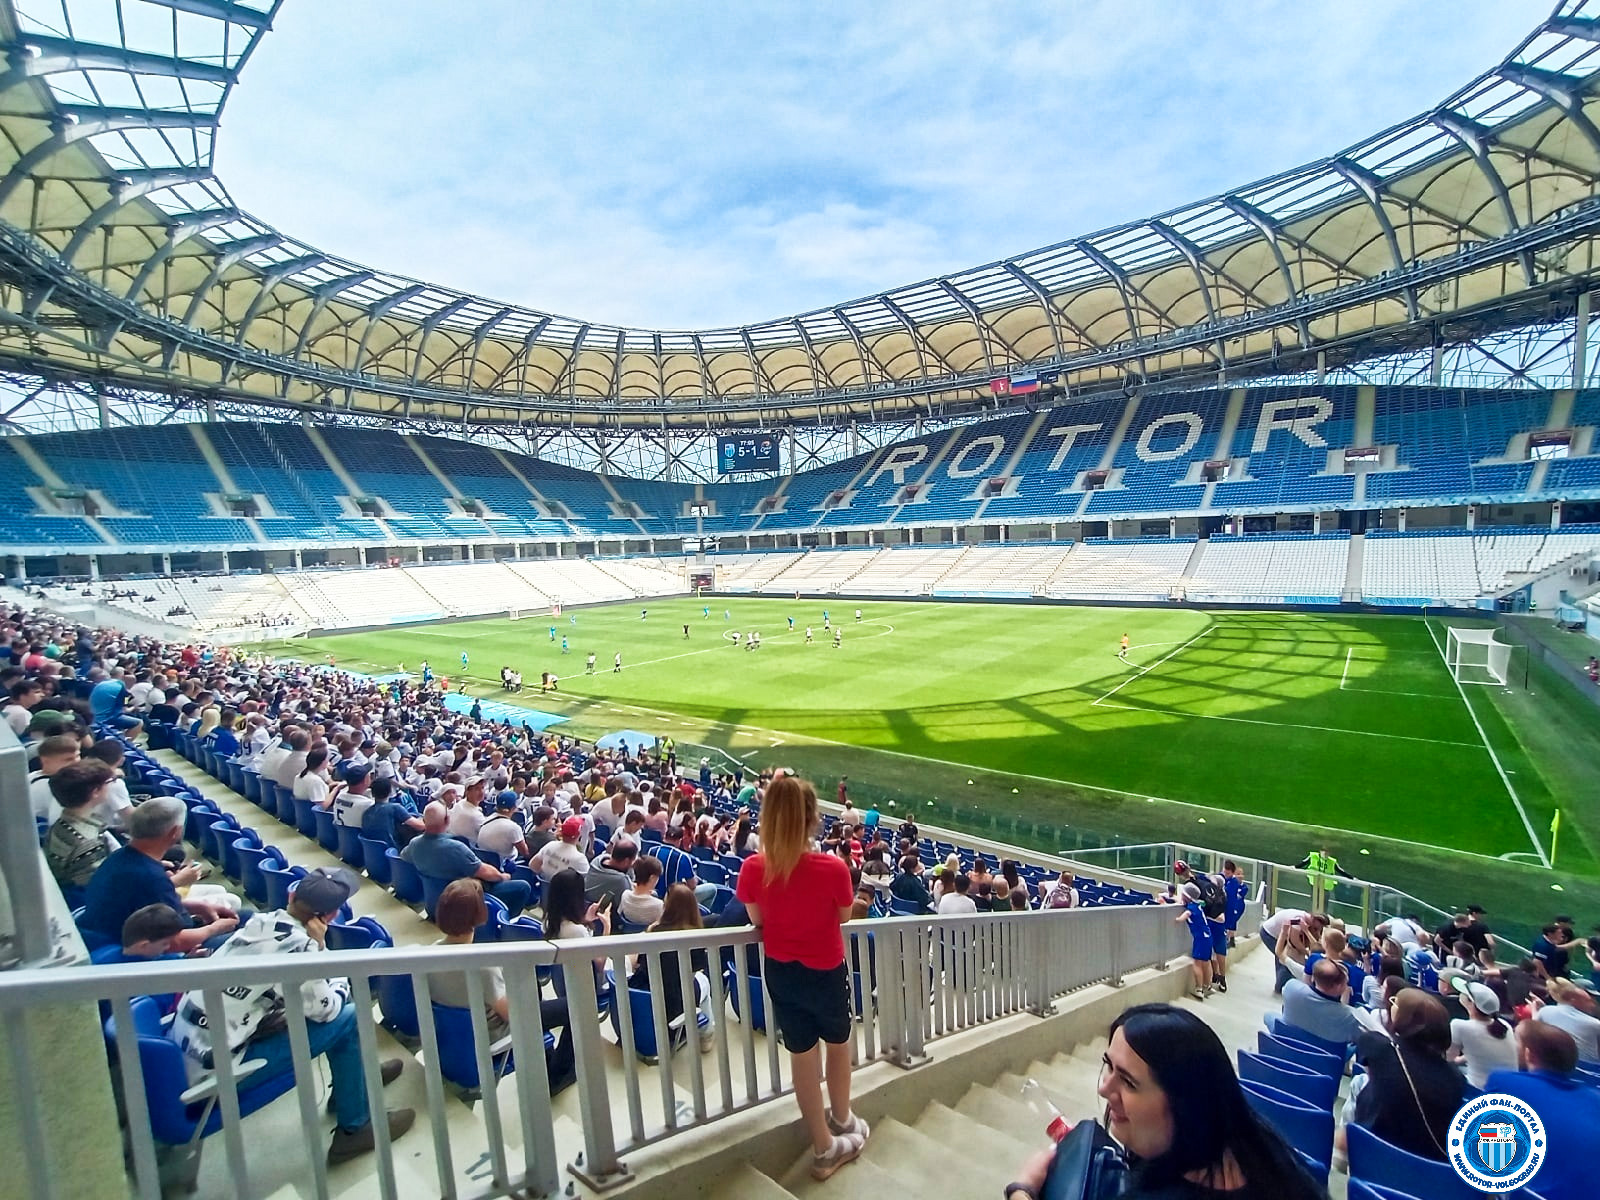 Стадион чемпионата 2018